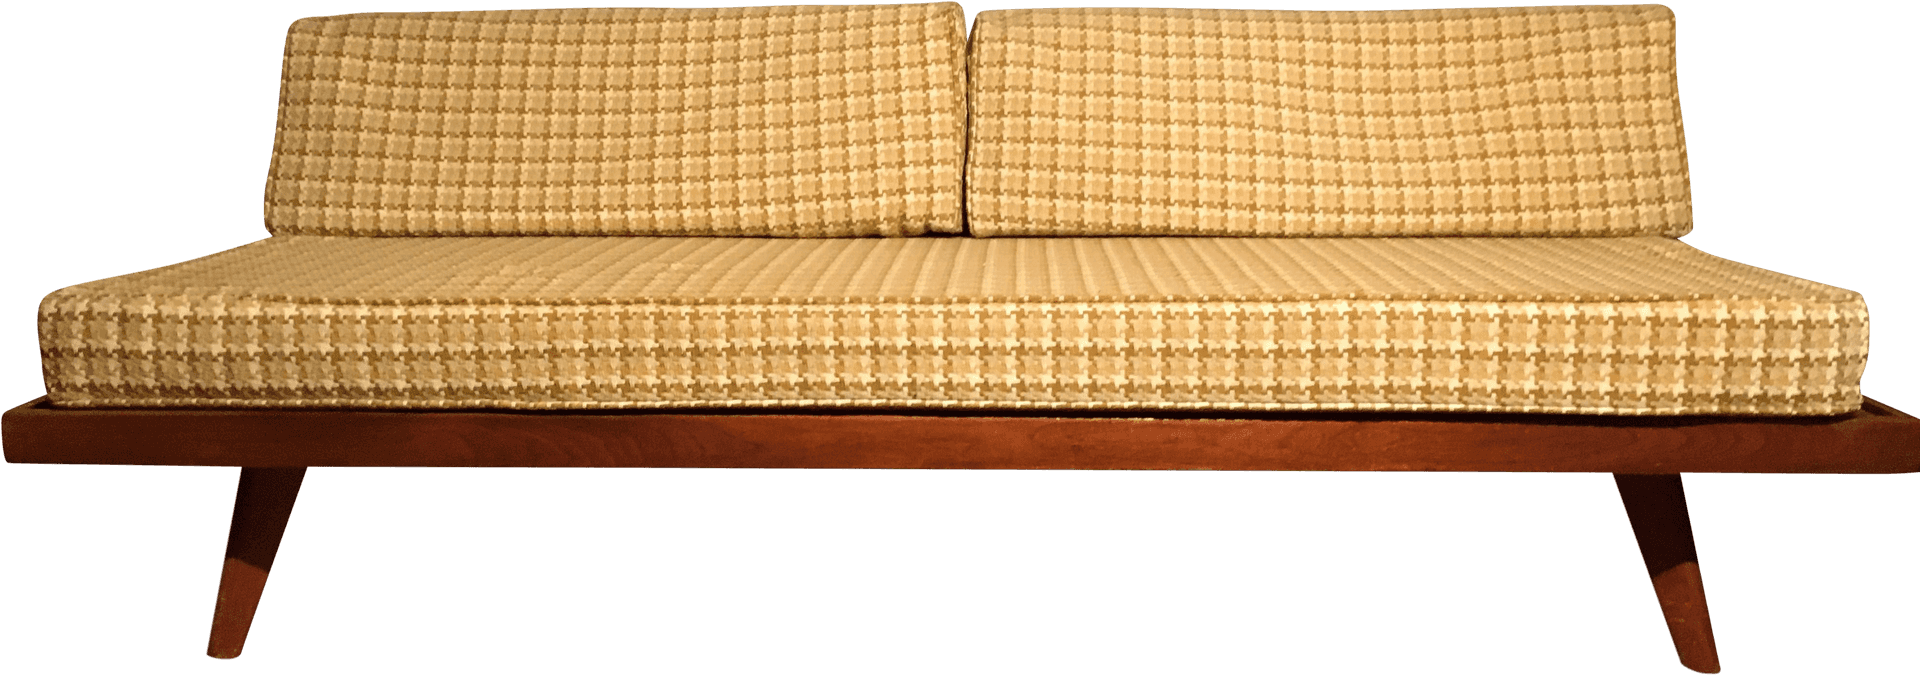 Mid Century Modern Yellow Sofa PNG image